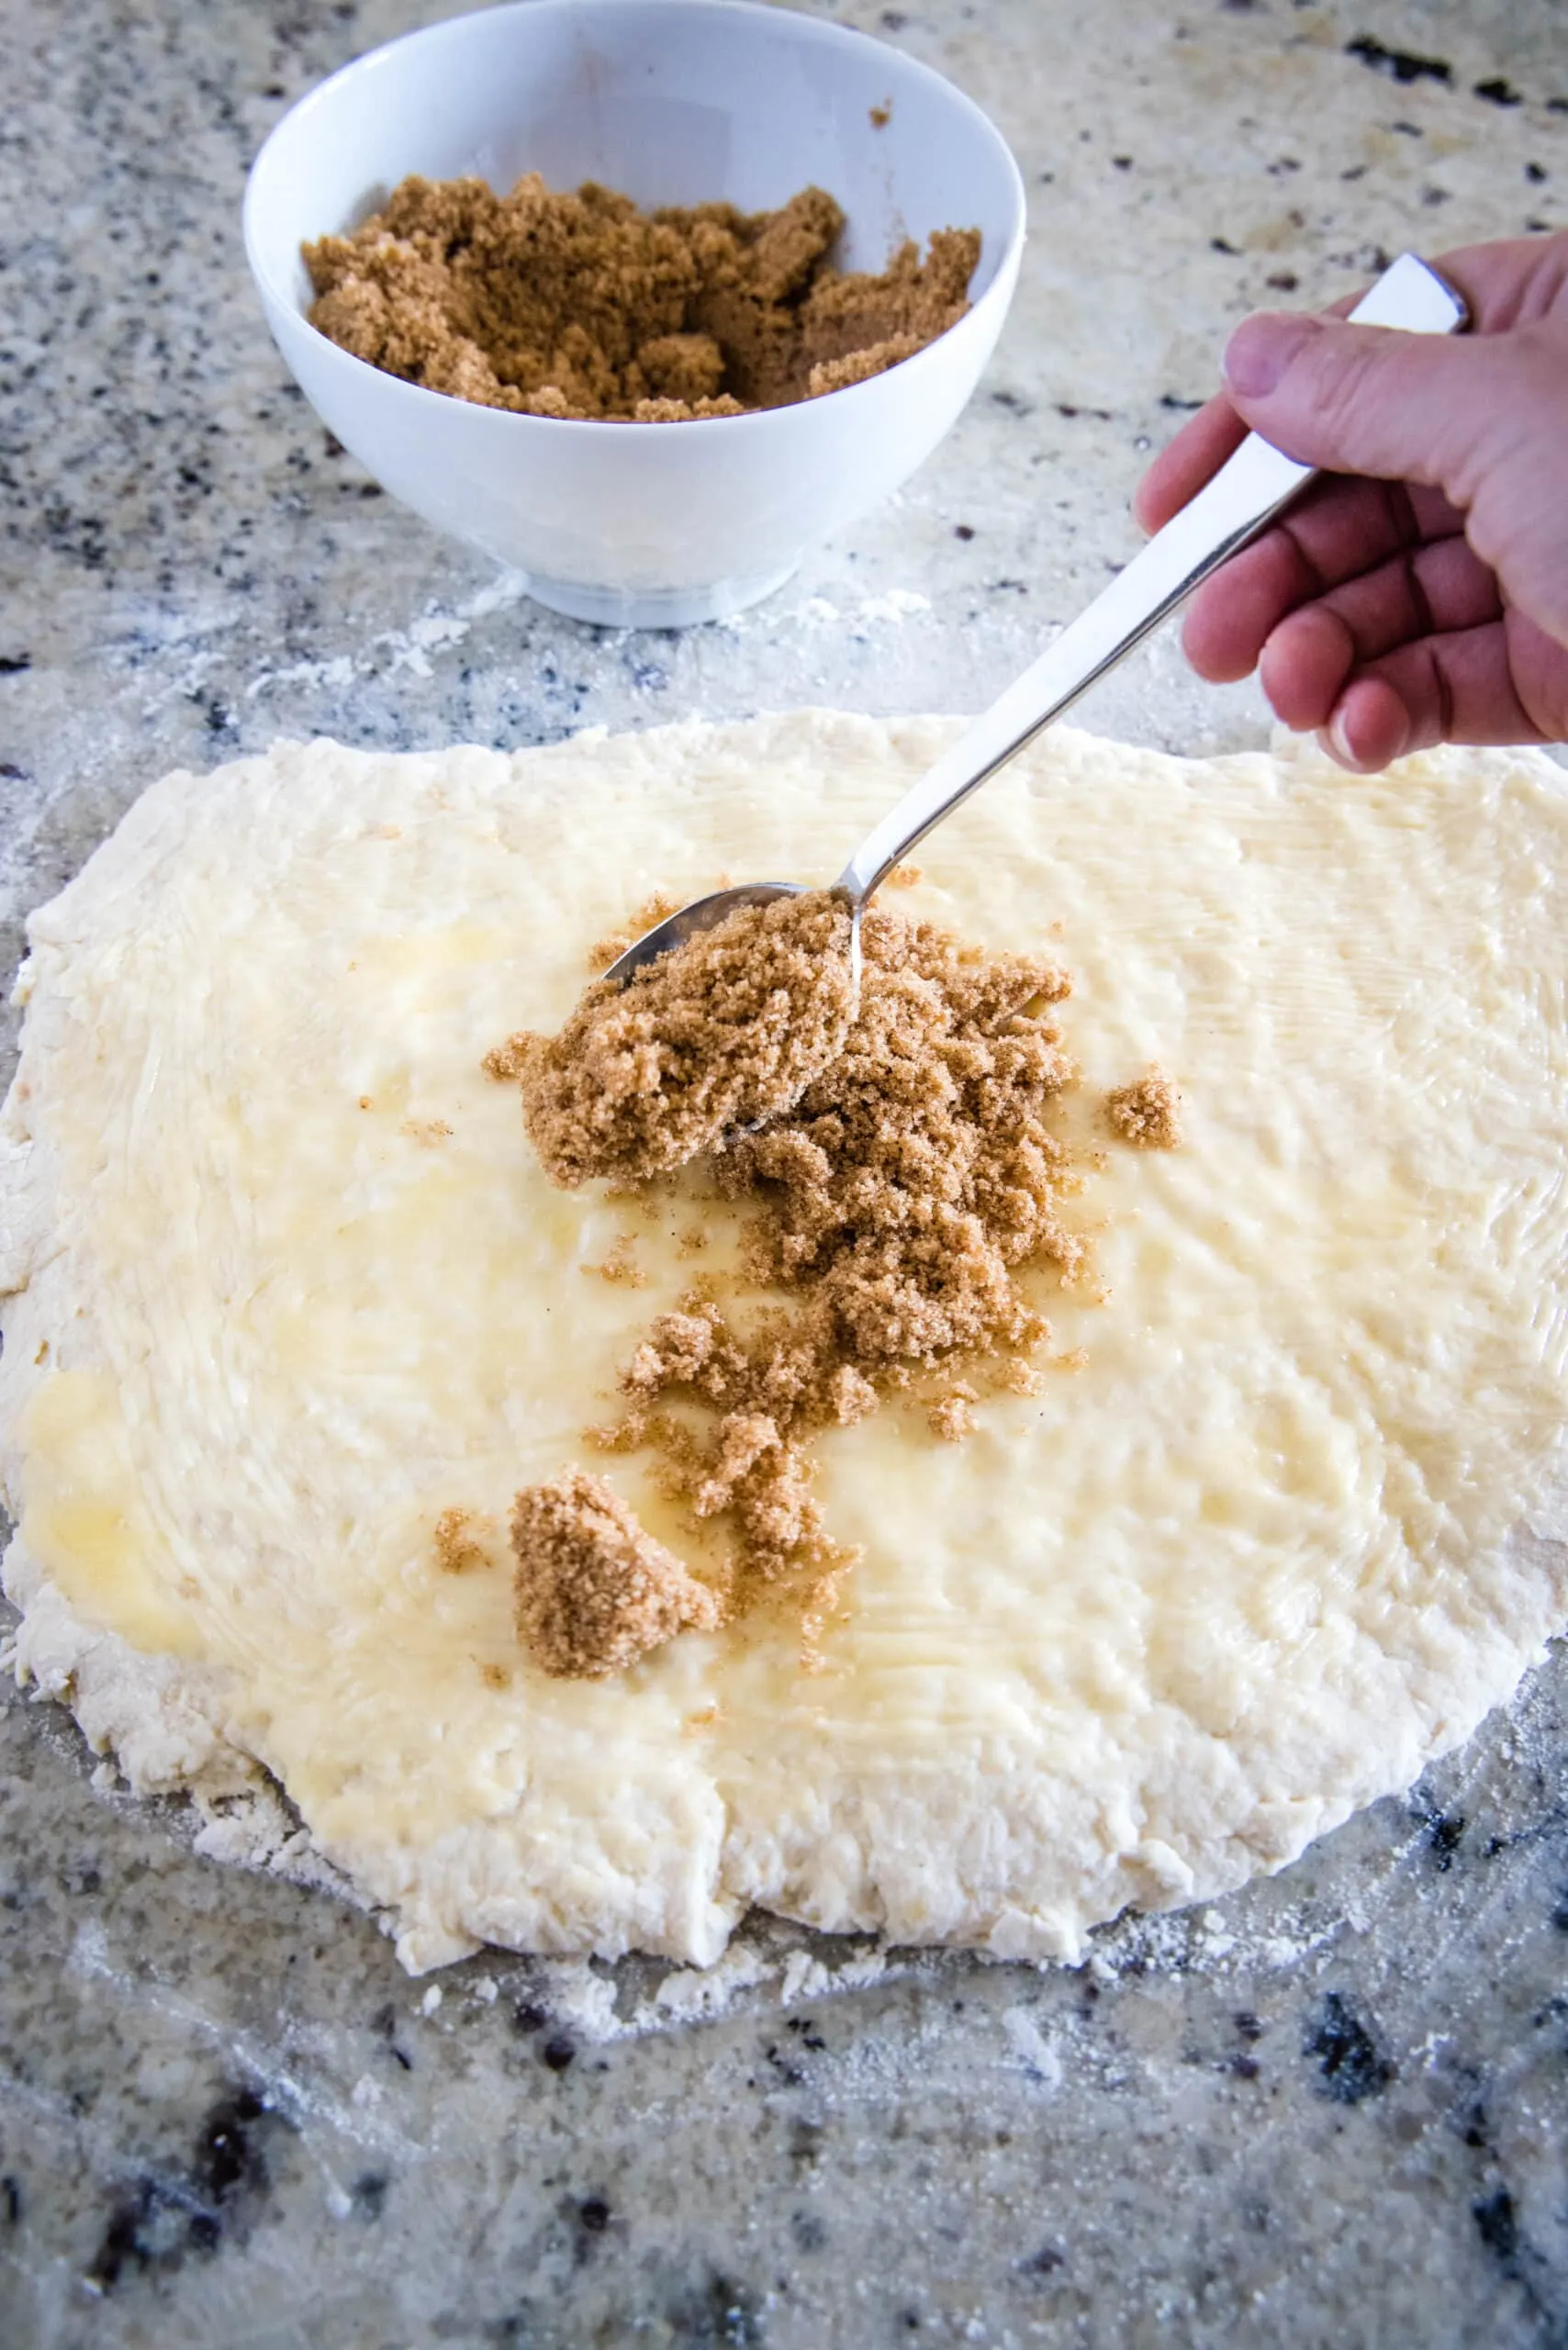 brown sugar filling being sprinkled on dough